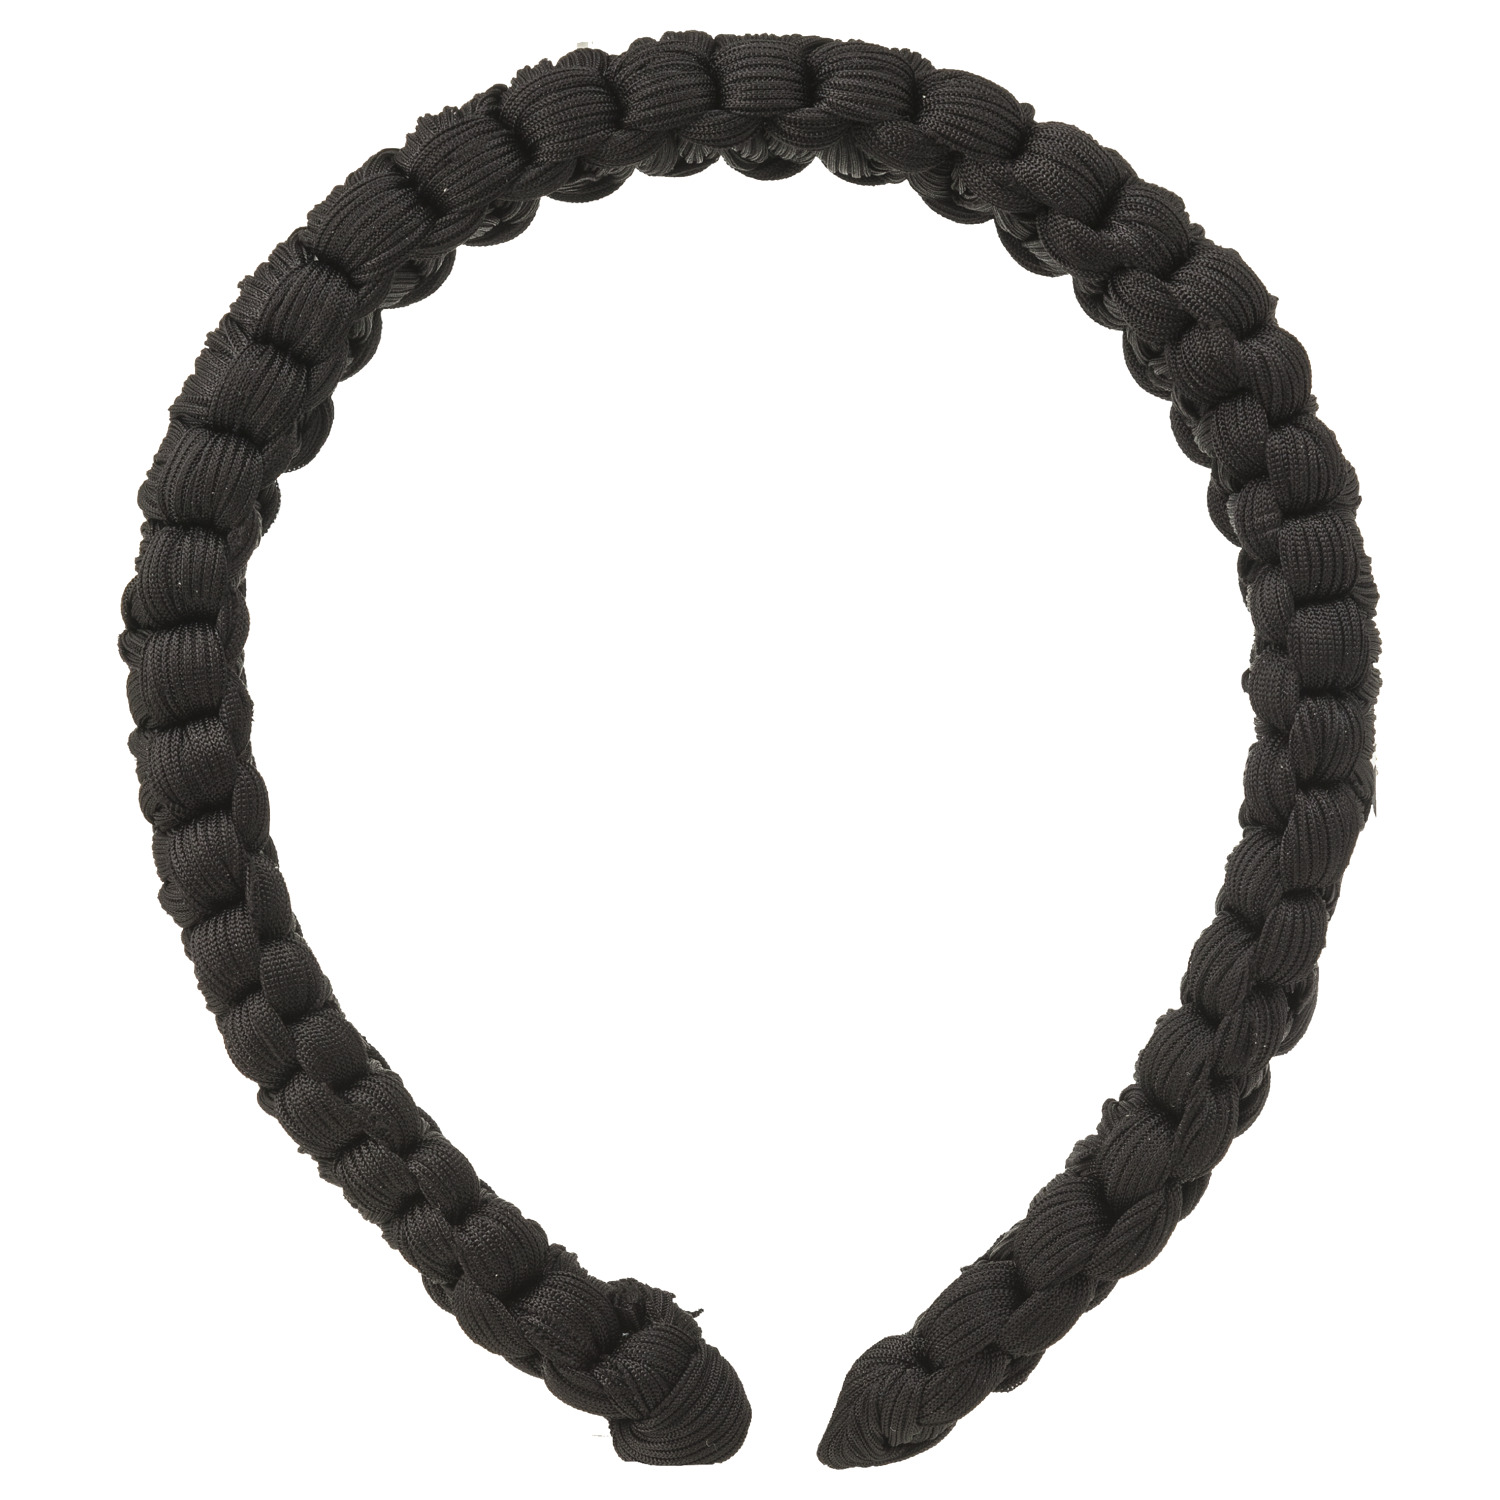 Hairband braided black